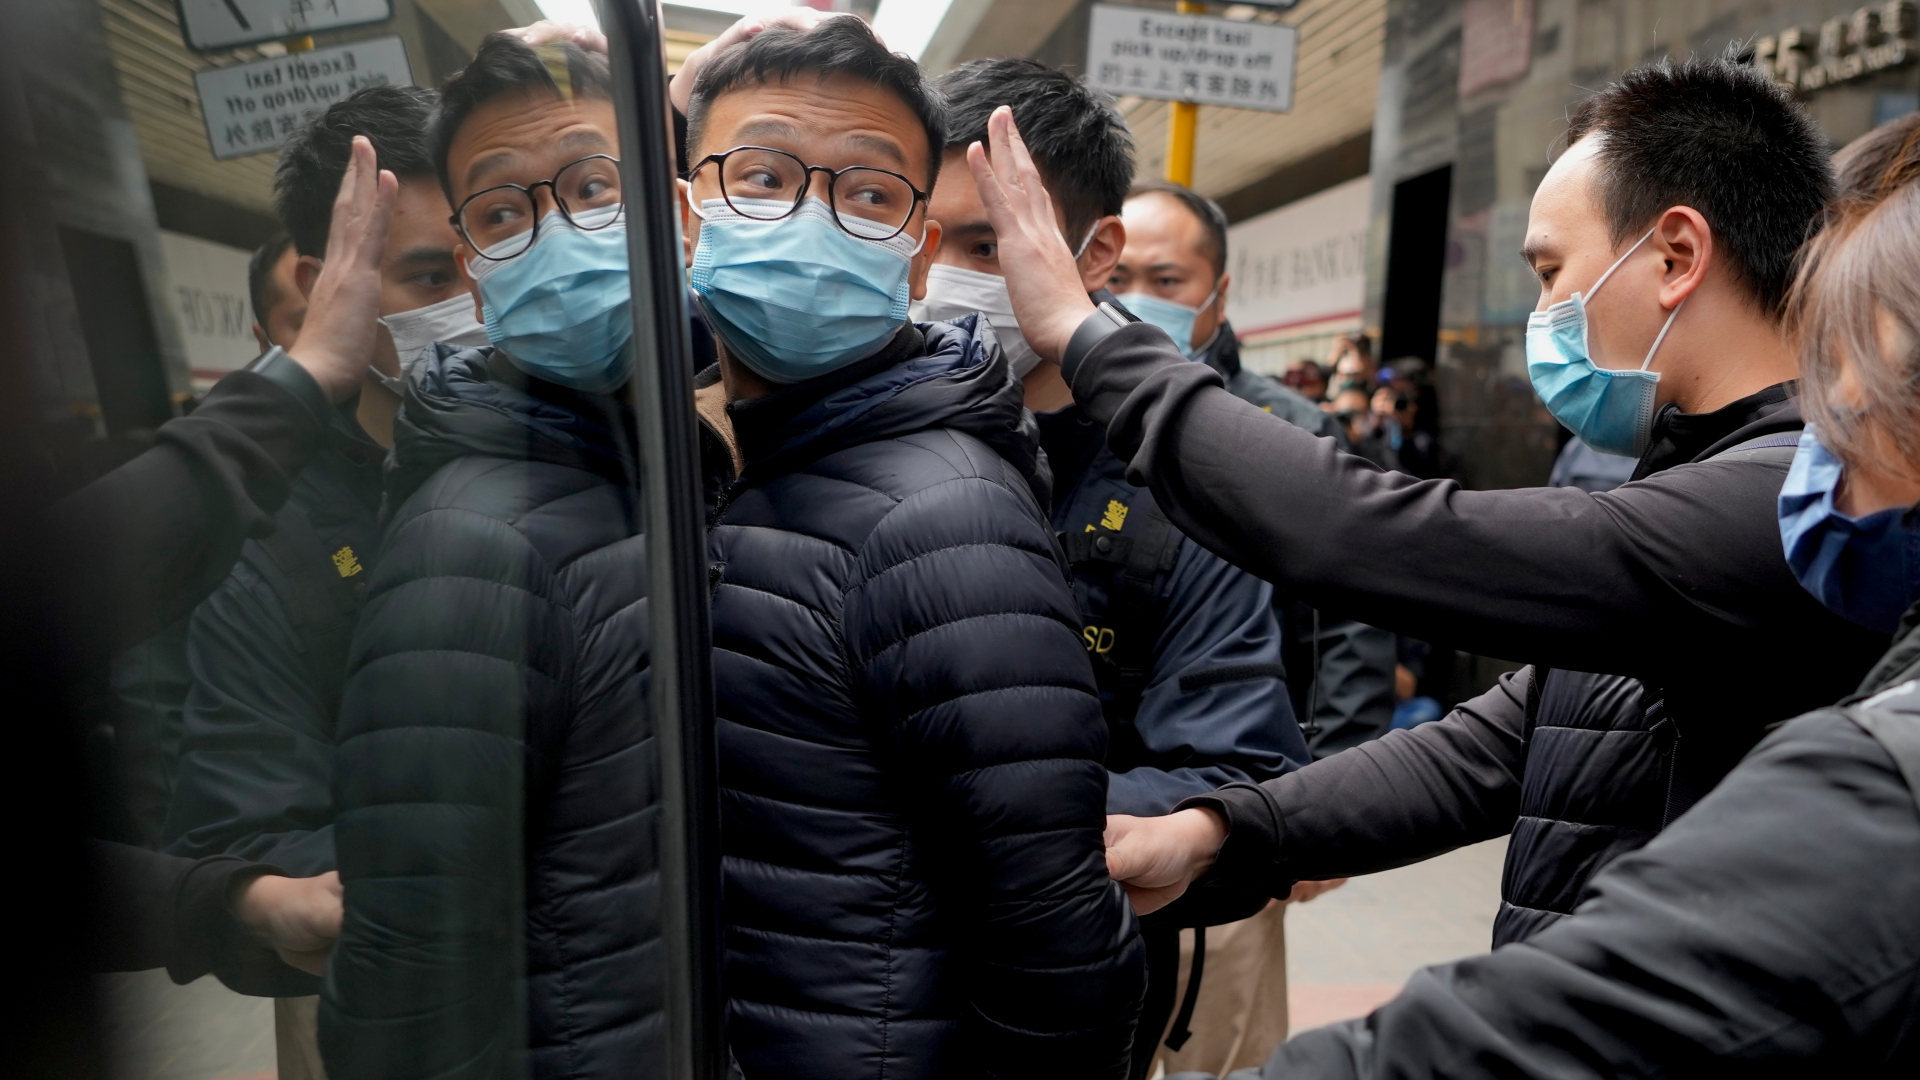 Polizei in Hongkong nimmt erneut Journalisten fest